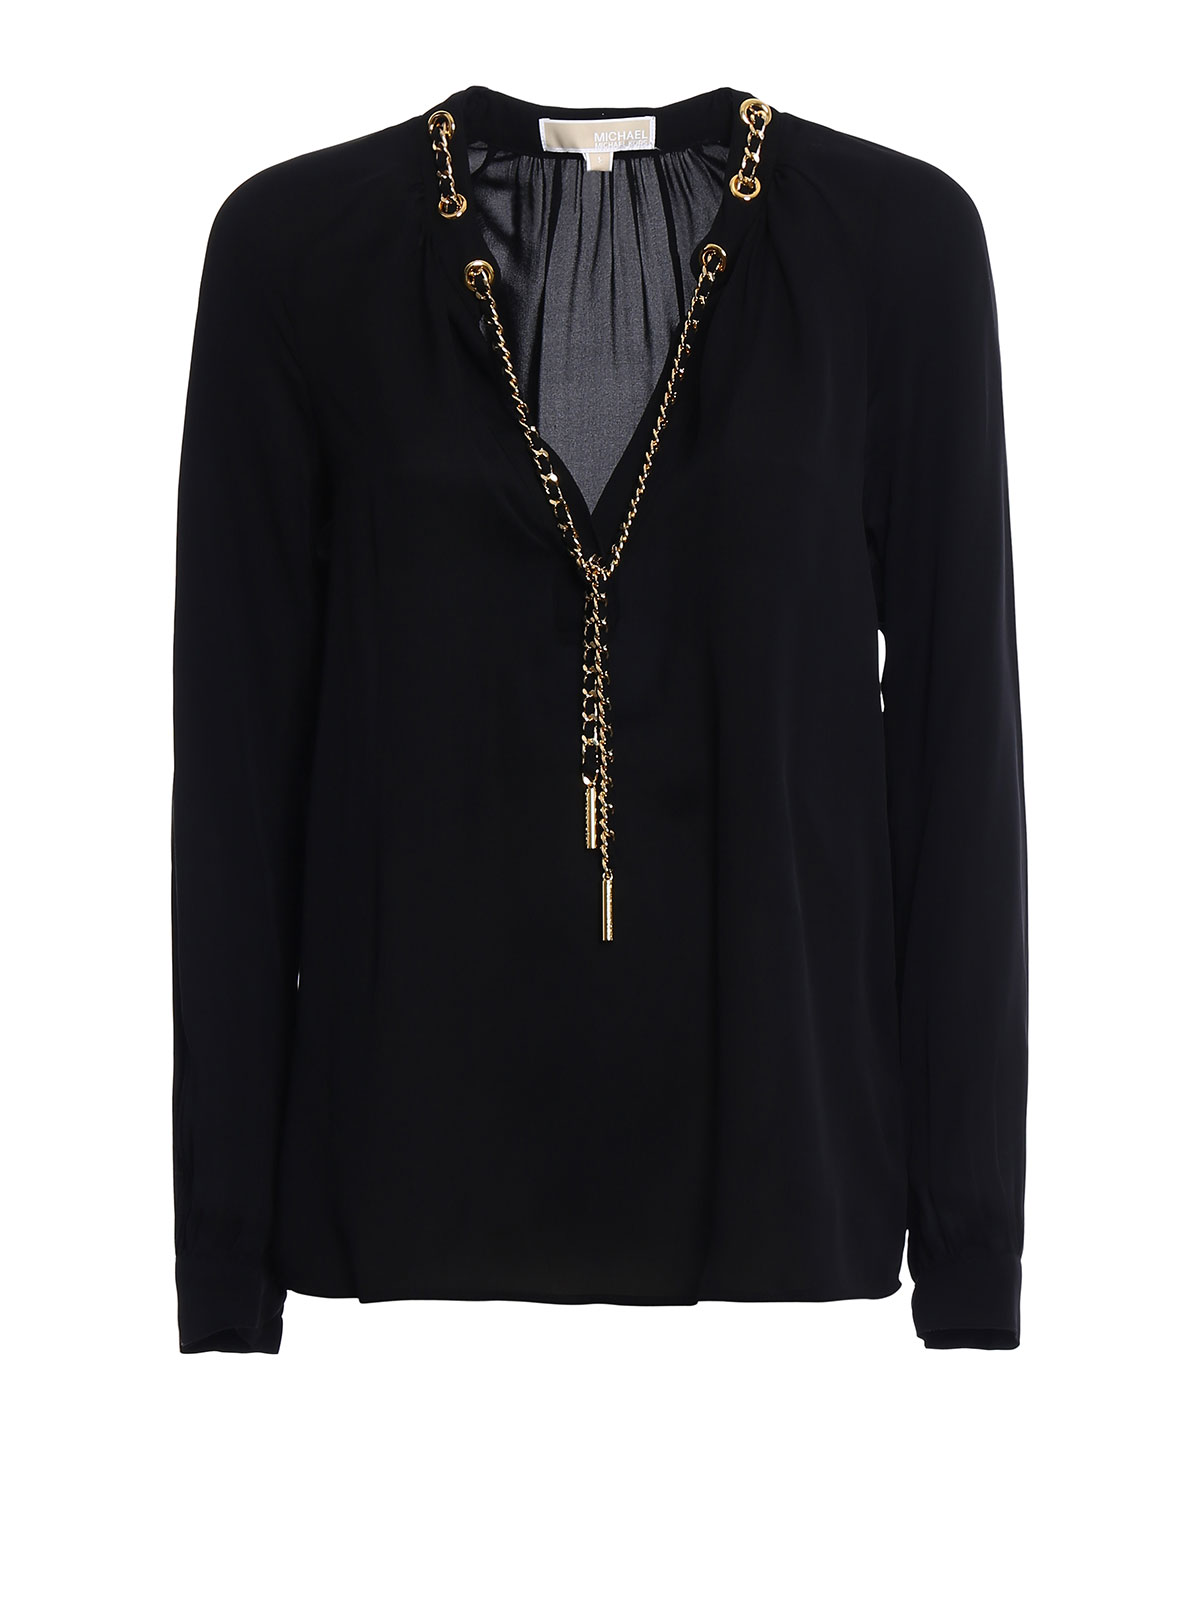 Blouses Michael Kors - Chain detailed black silk blouse - MU74L8FVY0001